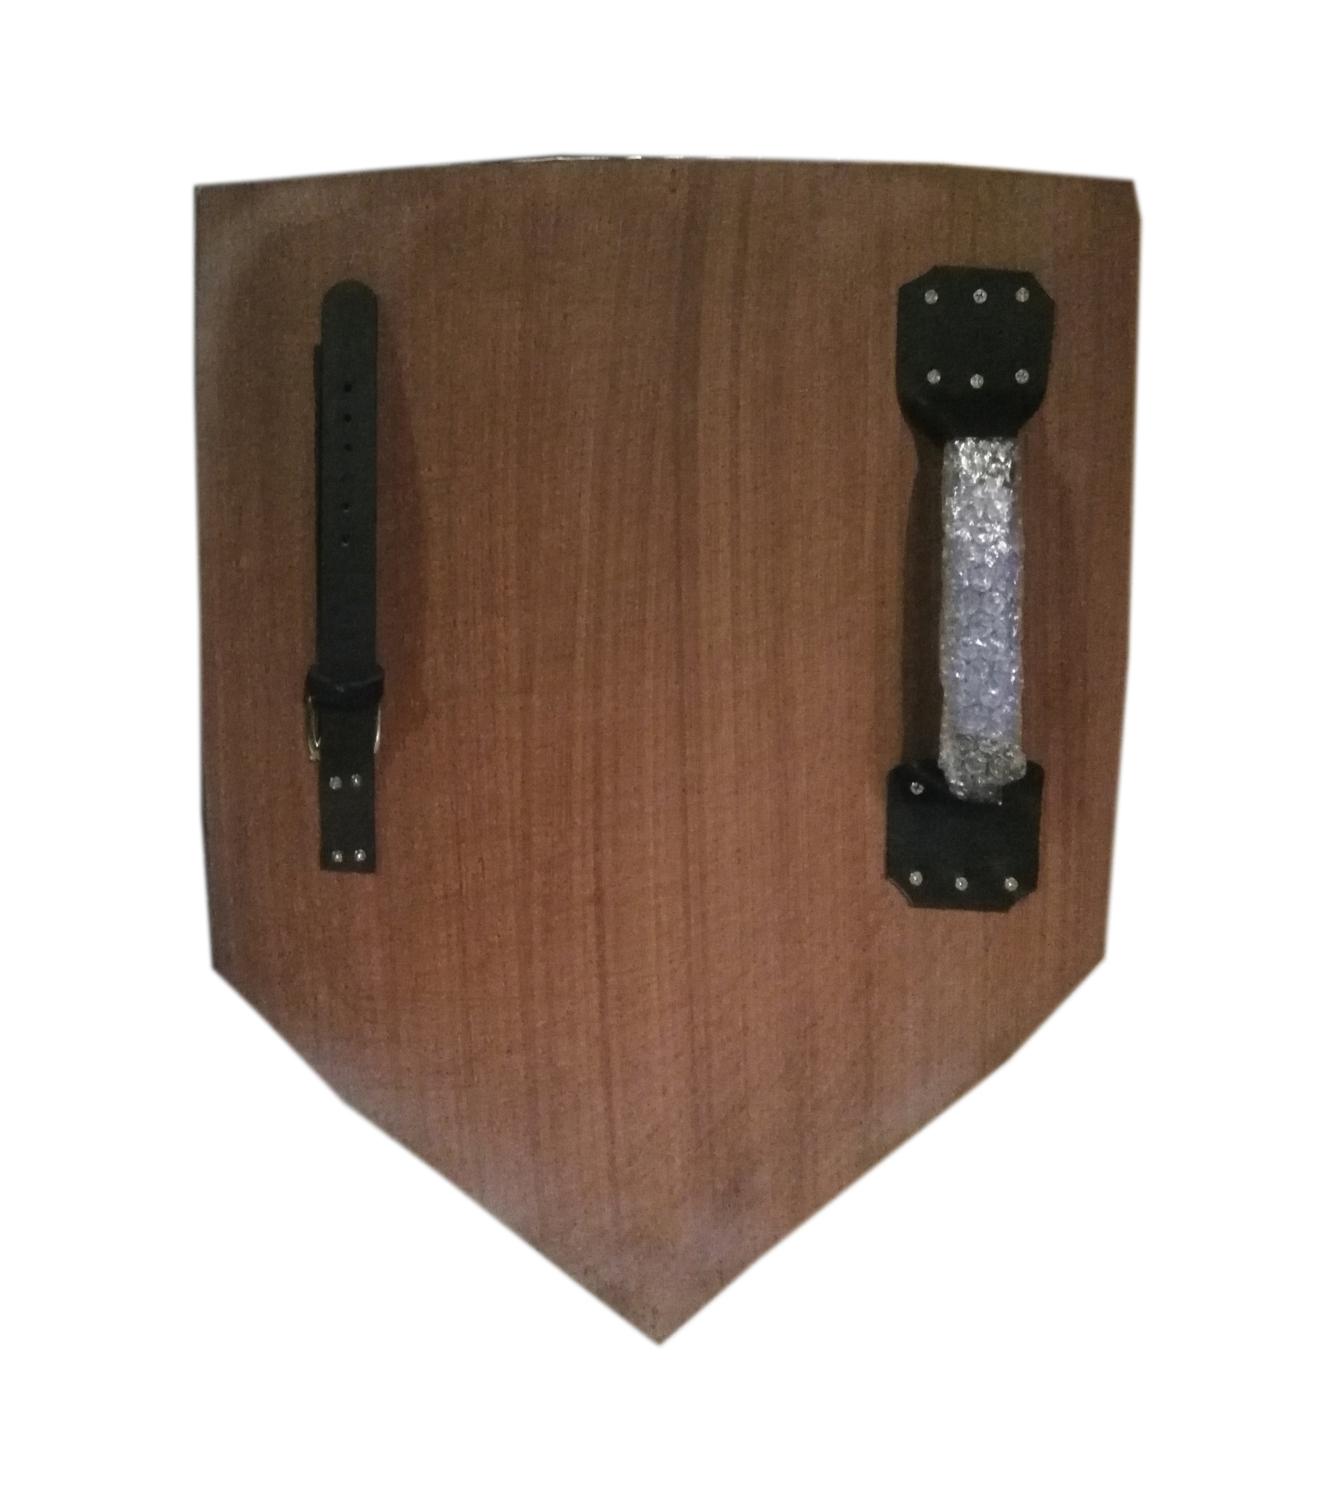 Wooden Medieval Viking Cross Shield - Blue SWE104